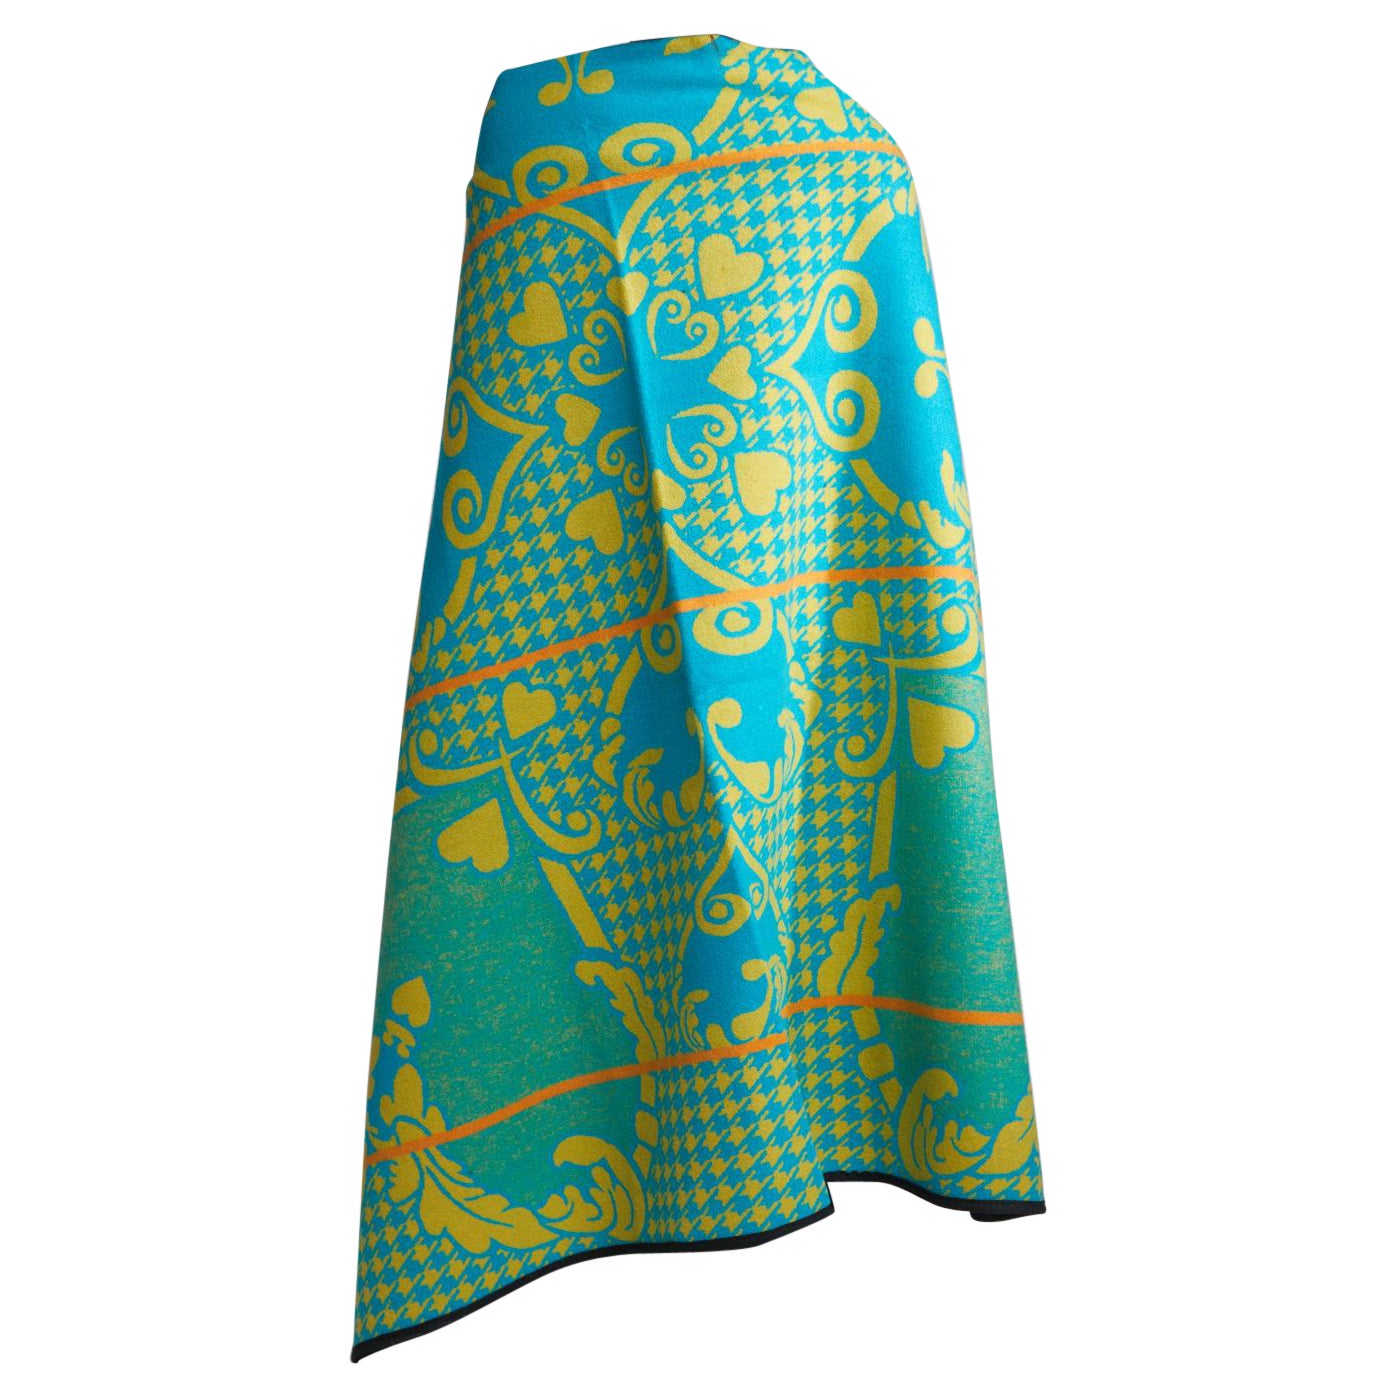 Basotho Heritage Blanket Scarf - Turquoise Mustard Heart For Sale